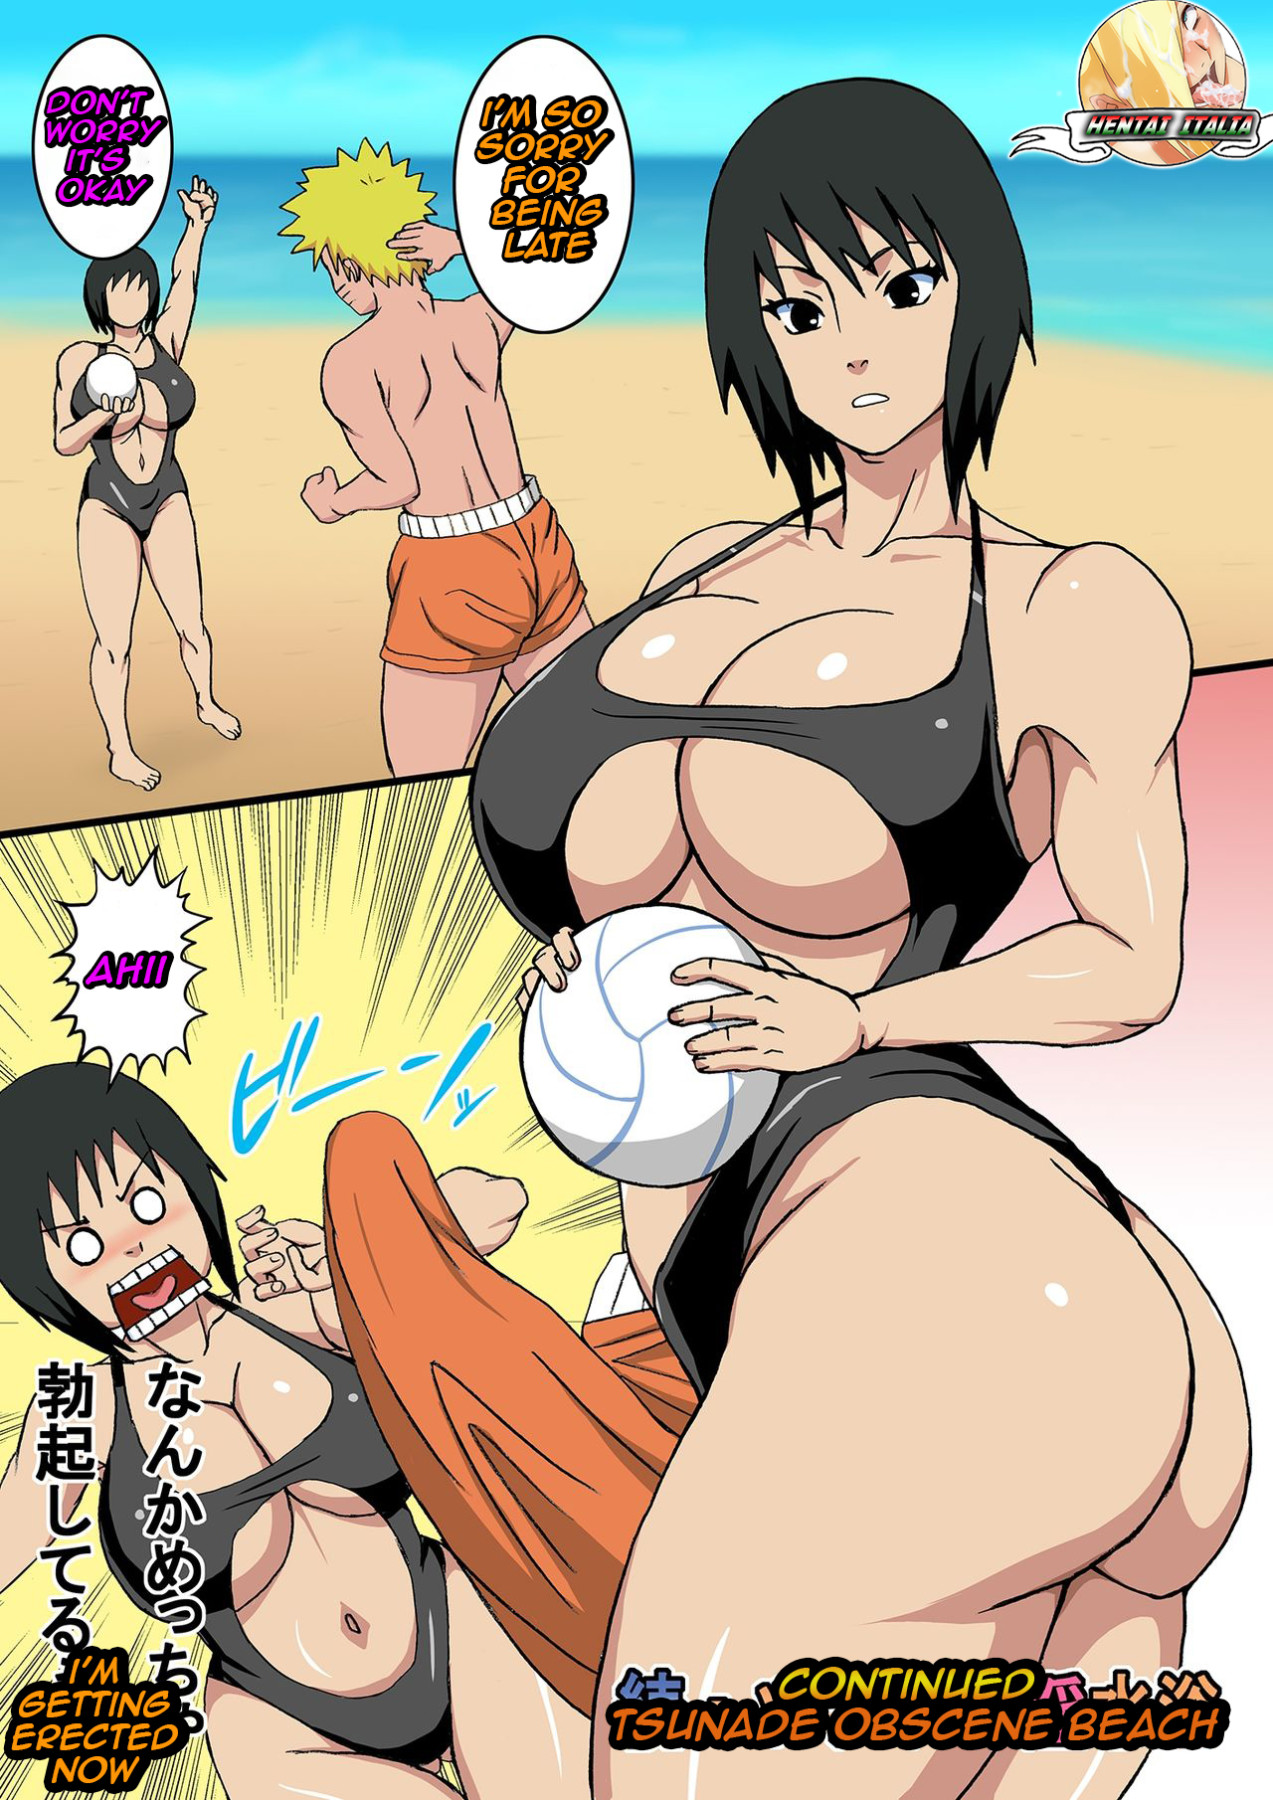 Hentai Manga Comic-v22m-After Tsunade Beach-Read-2